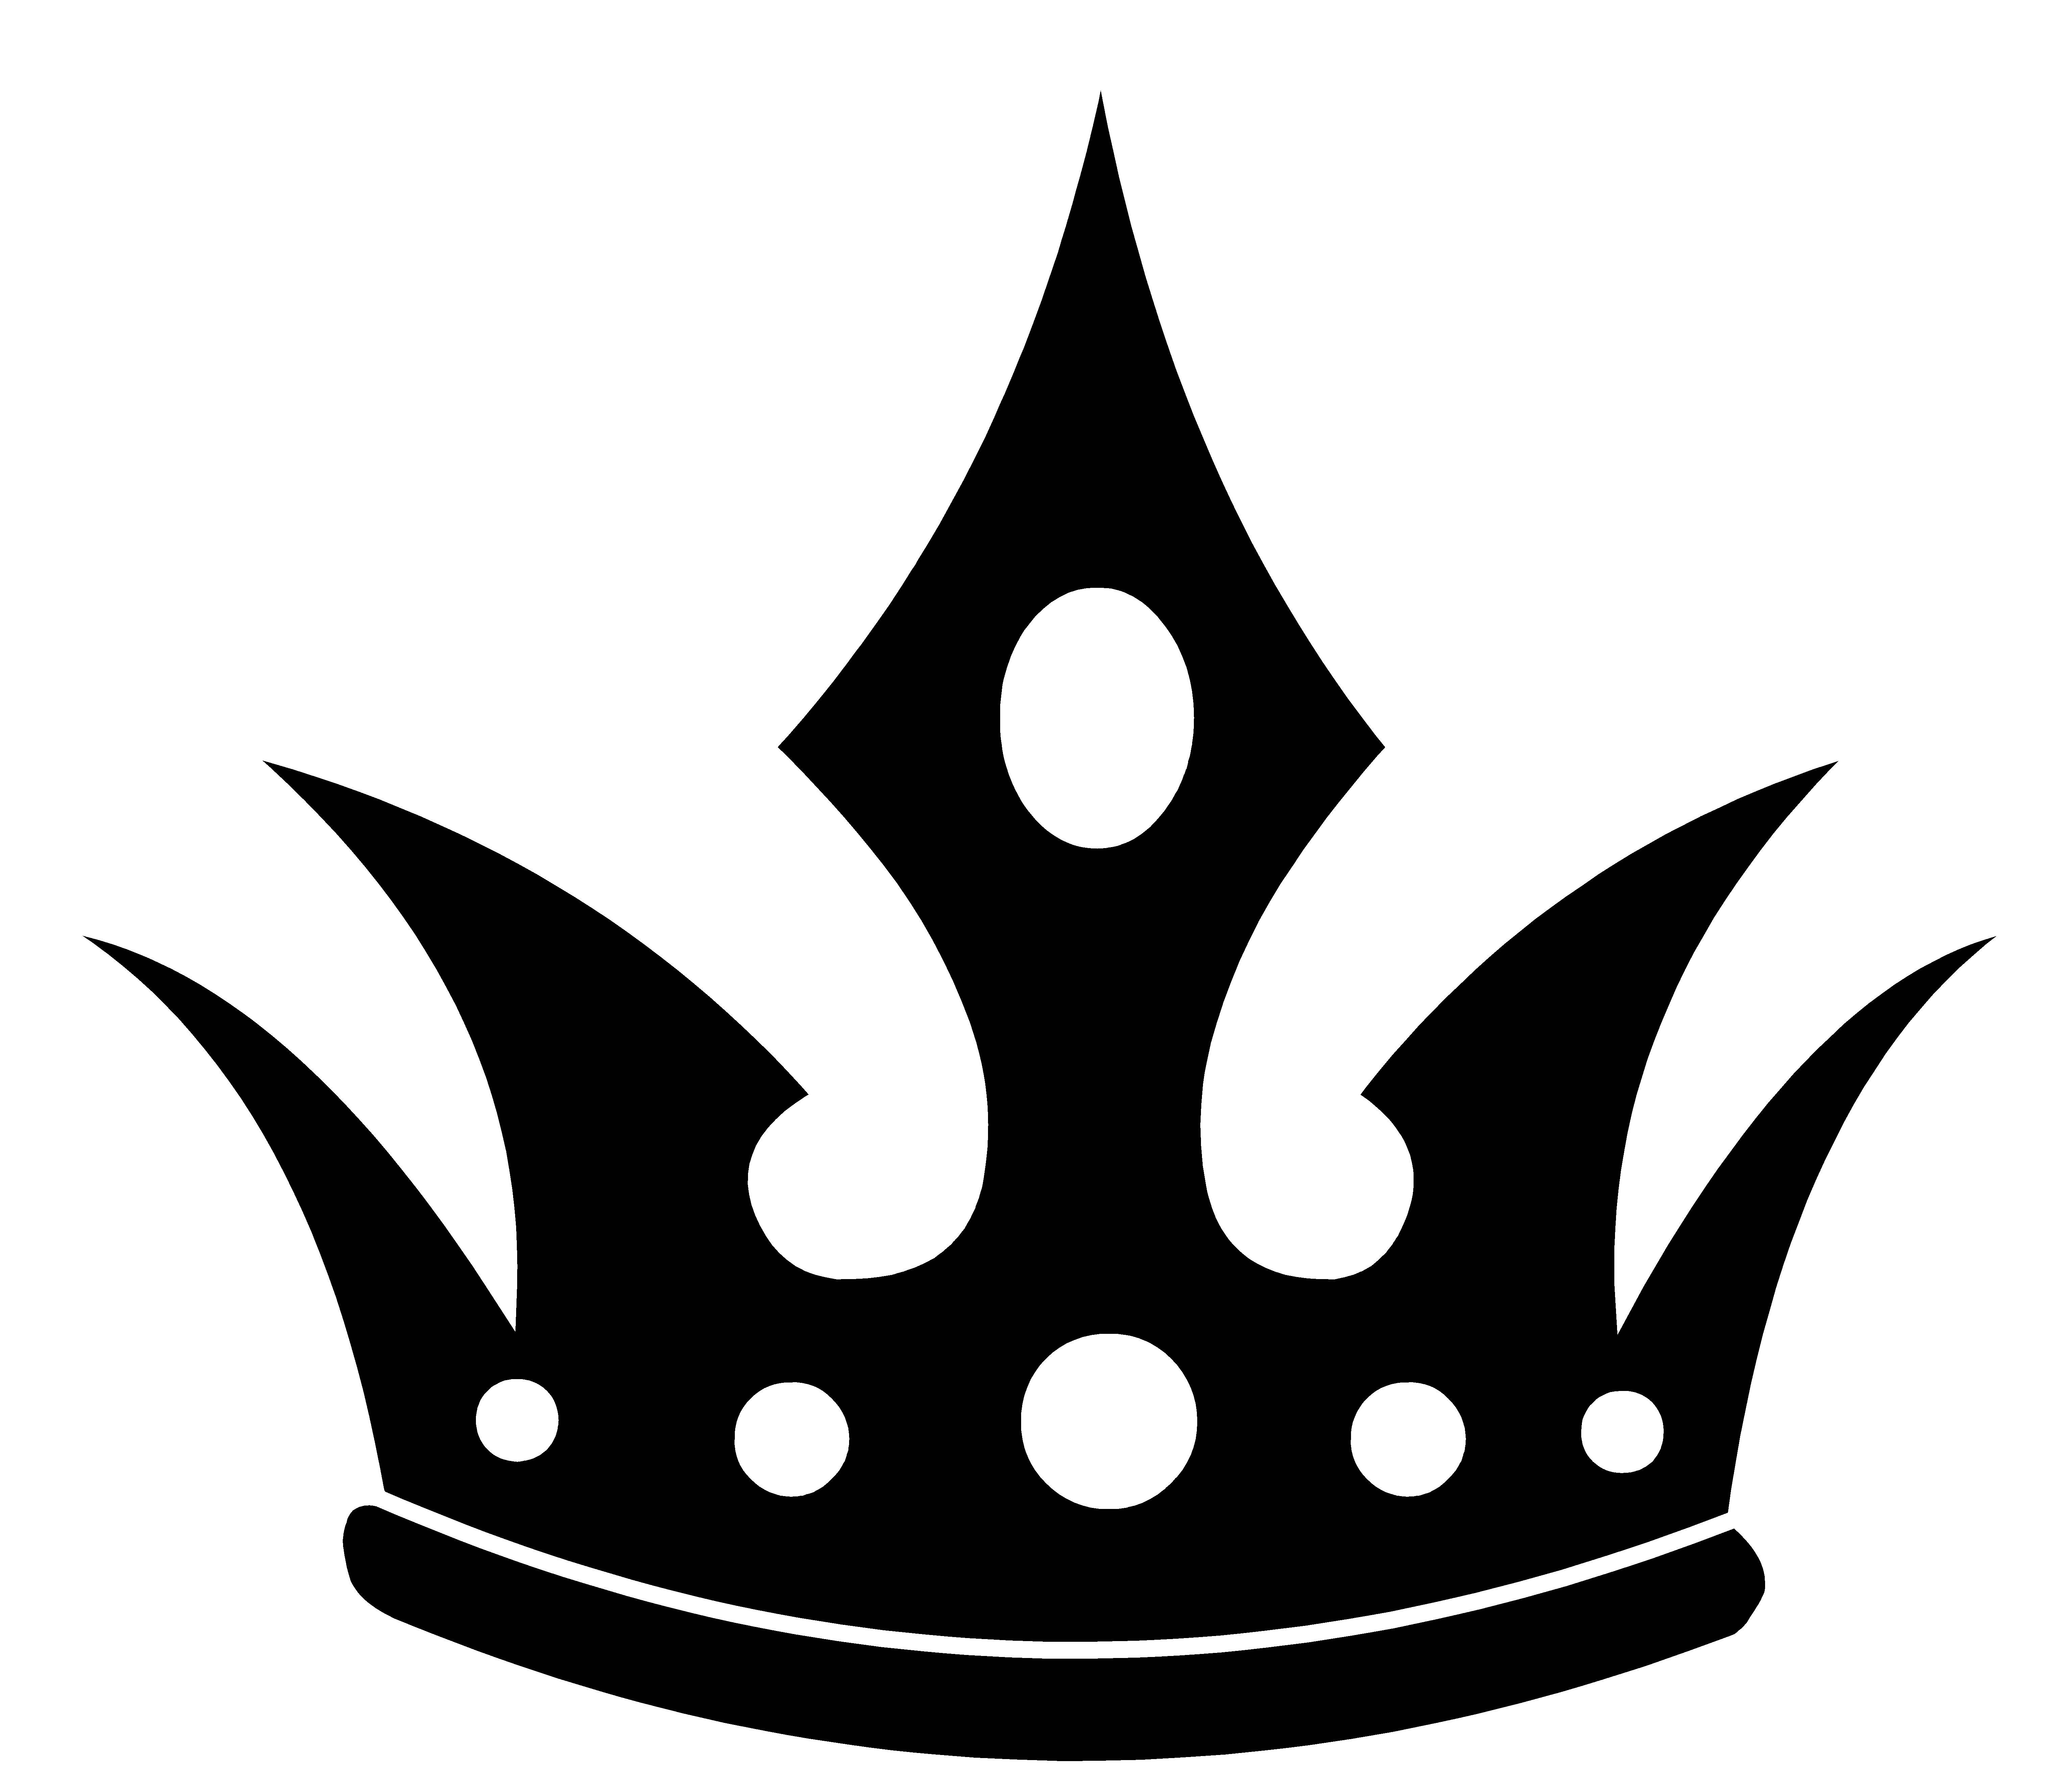 White Crown Logo - Free Black And White Crown, Download Free Clip Art, Free Clip Art on ...